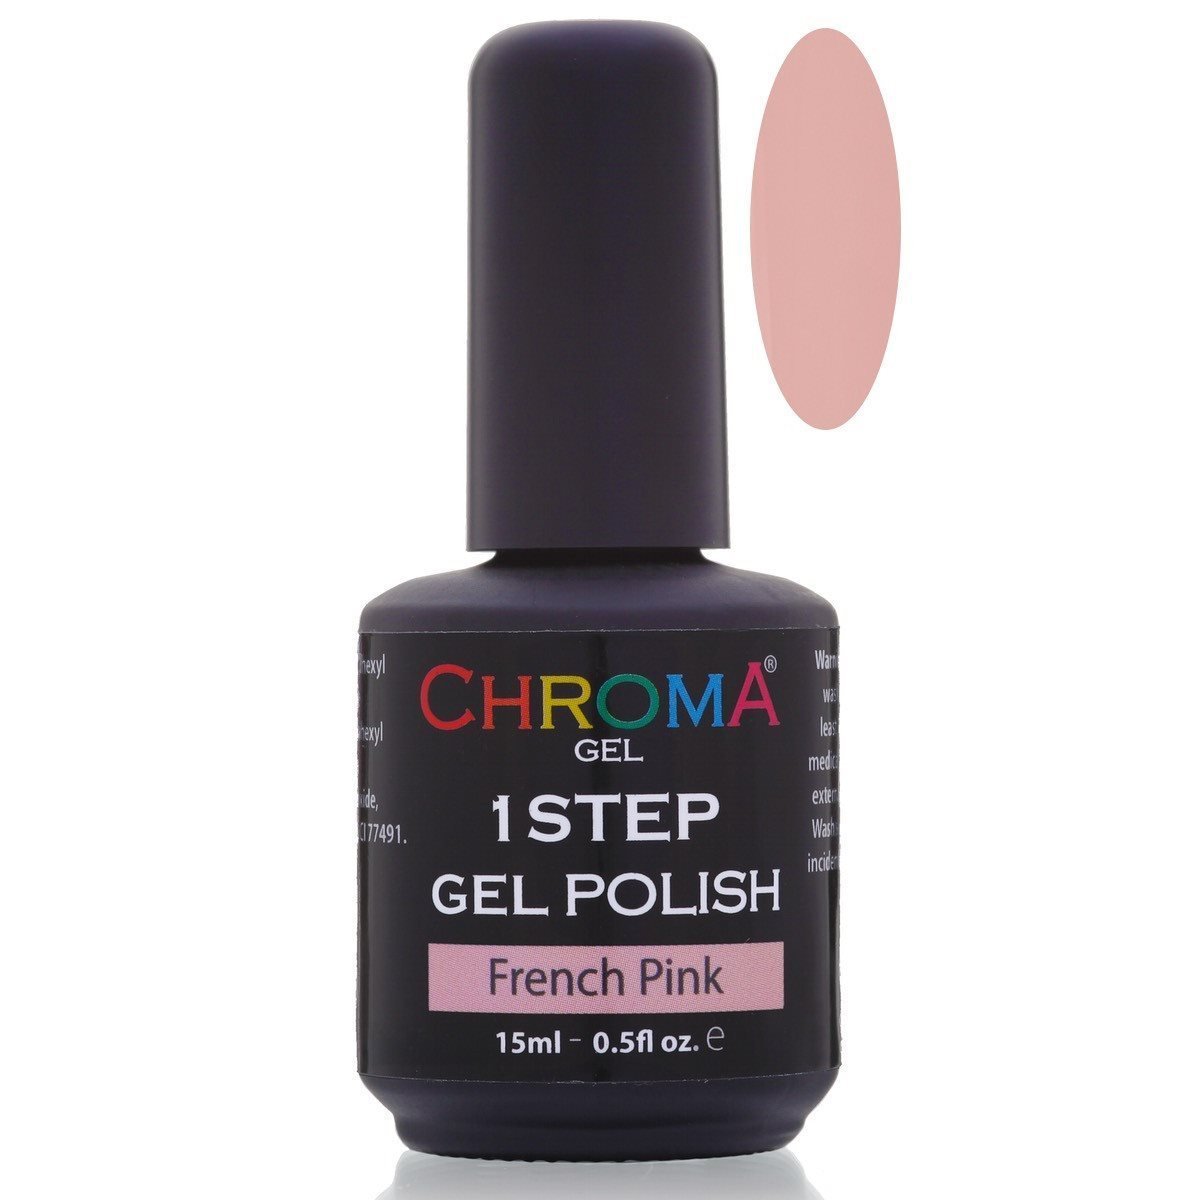 Chroma Gel 1 Step French Pink No.2 Gel Polish - beautyhair.co.ukChroma Gel